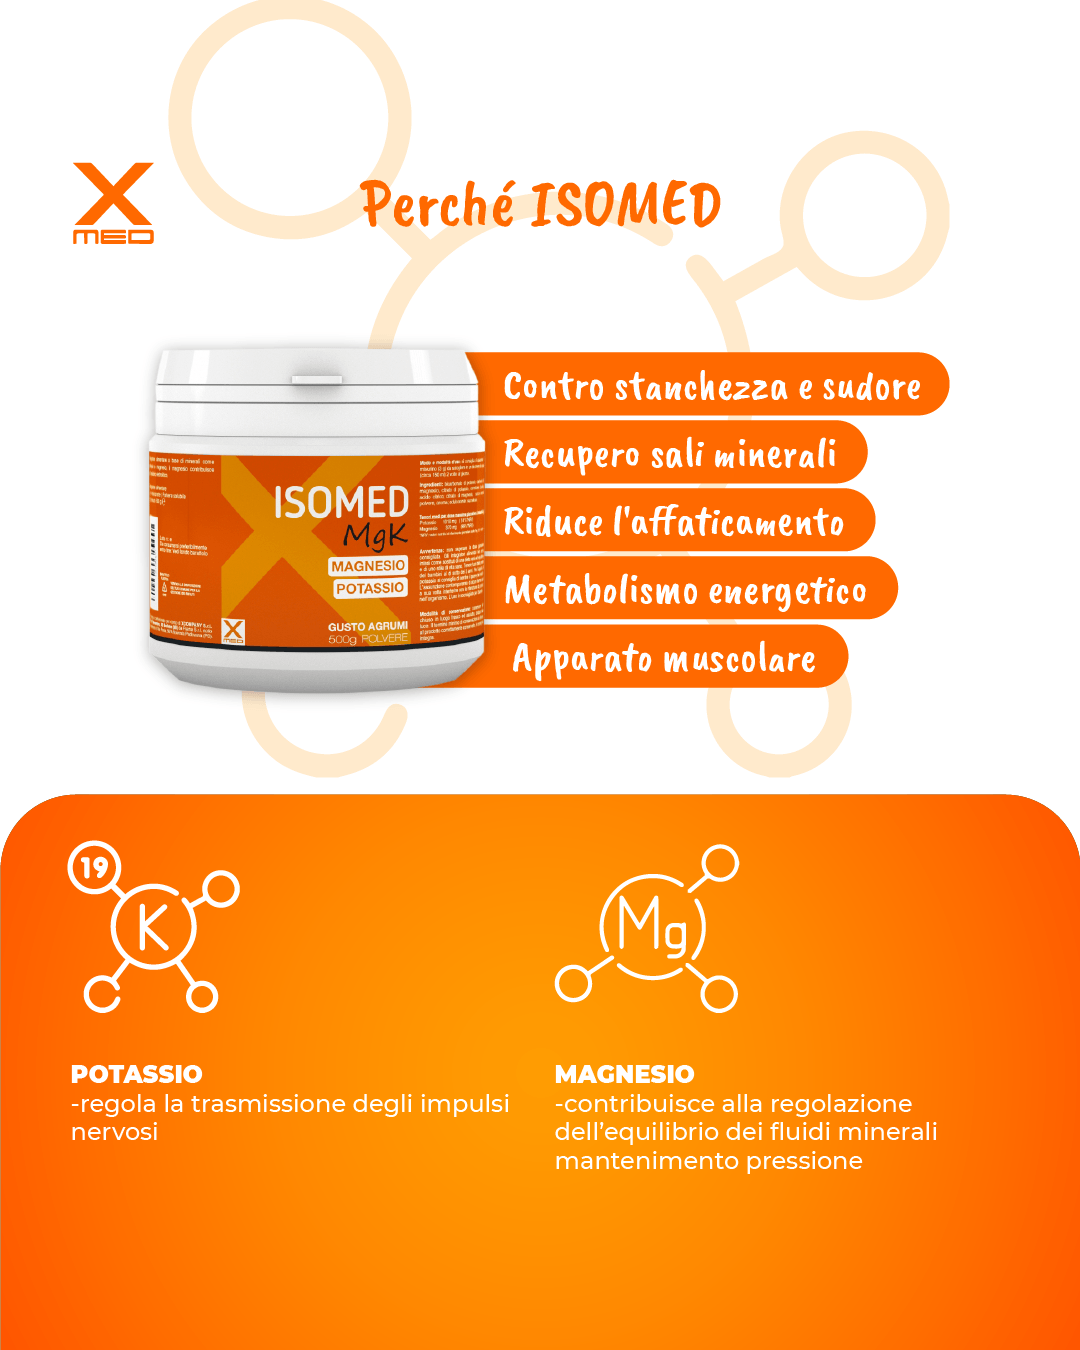 XMed Online – Isomed Mgk (2)